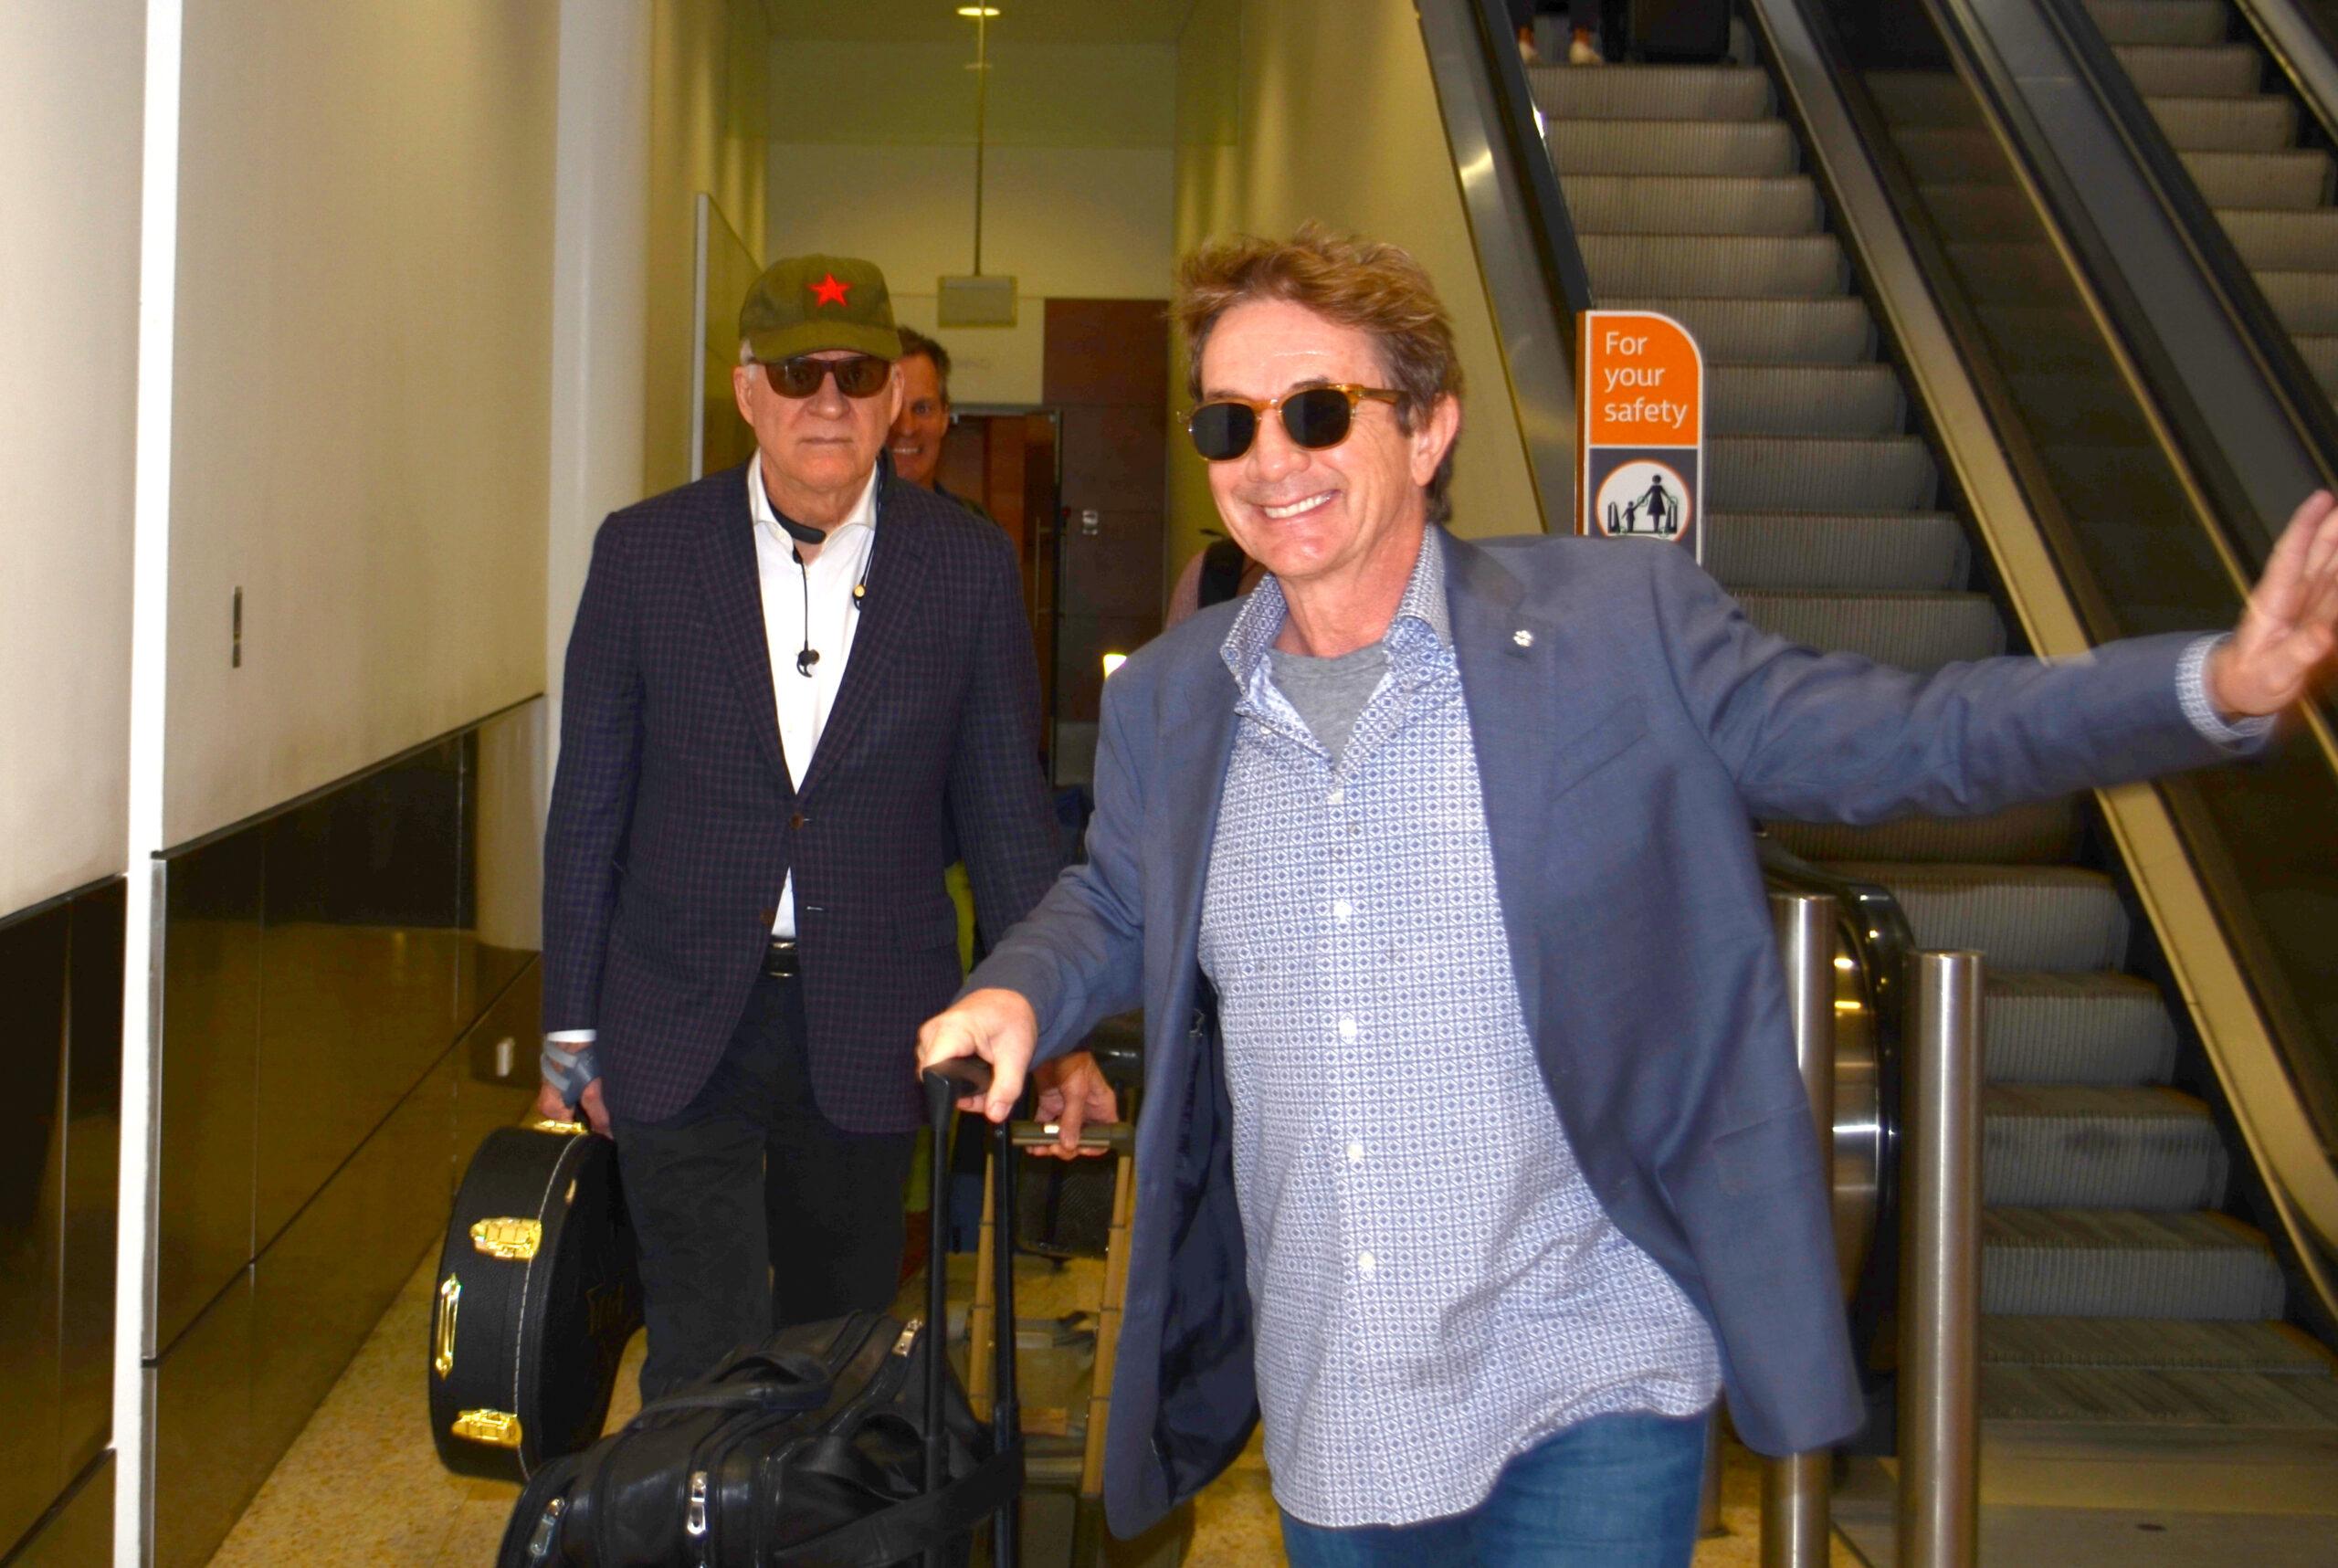 Steve Martin and Martin Short arrive at Sydney International Airport